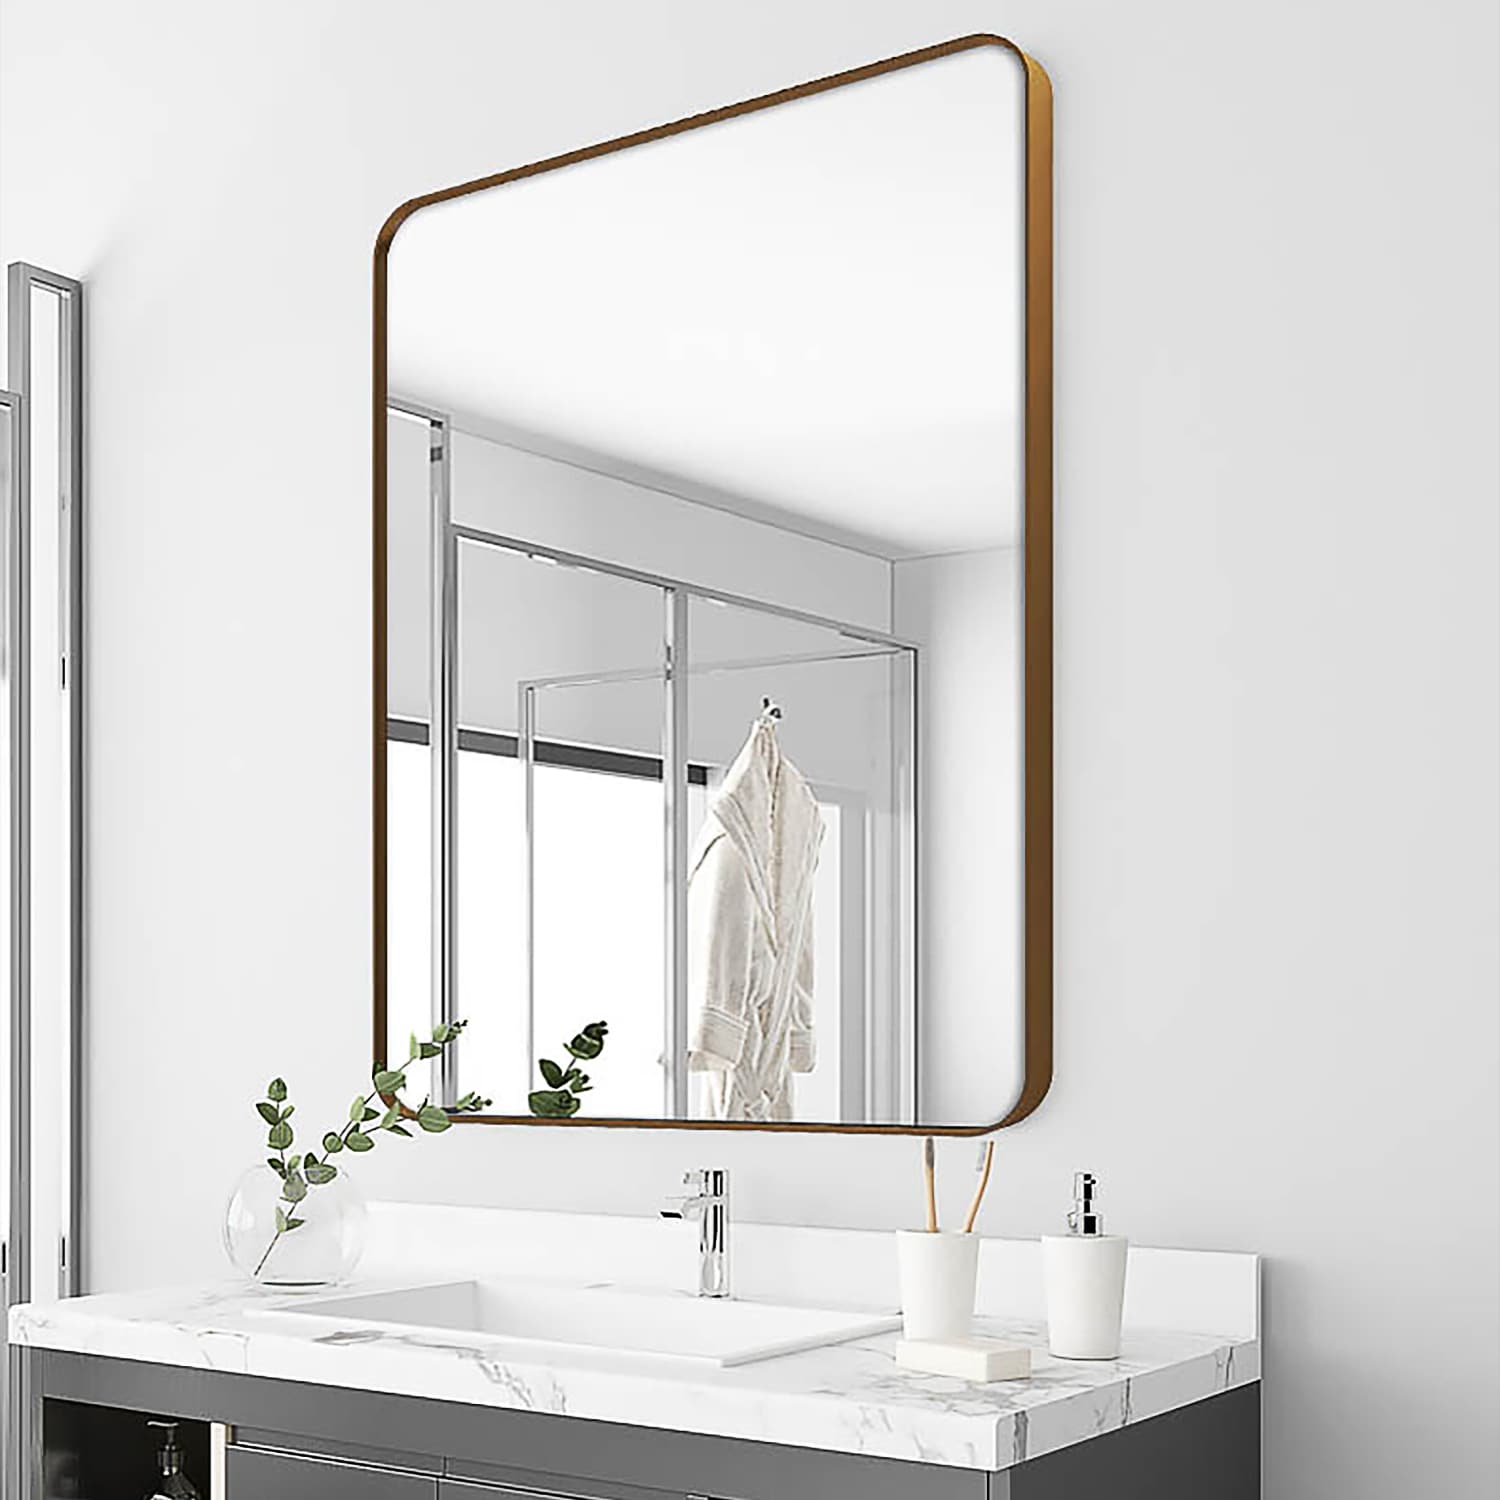 MR Bathroom Mirror 30-in x 36-in Brushed Gold Rectangular Framed Bathroom Vanity Mirror | - WELLFOR CR-P-S-2W01BN